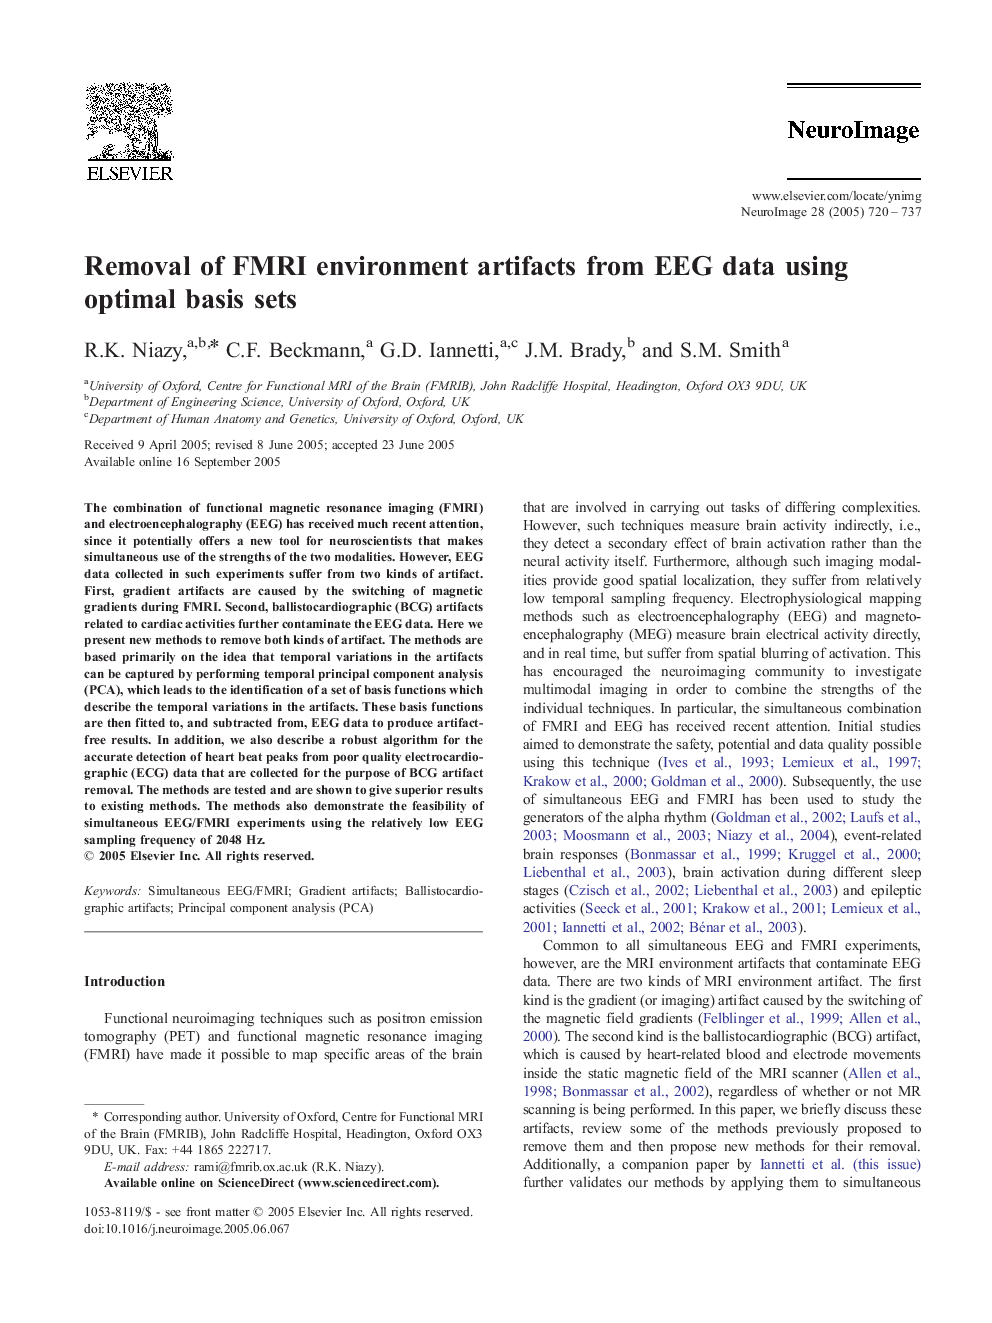 Removal of FMRI environment artifacts from EEG data using optimal basis sets